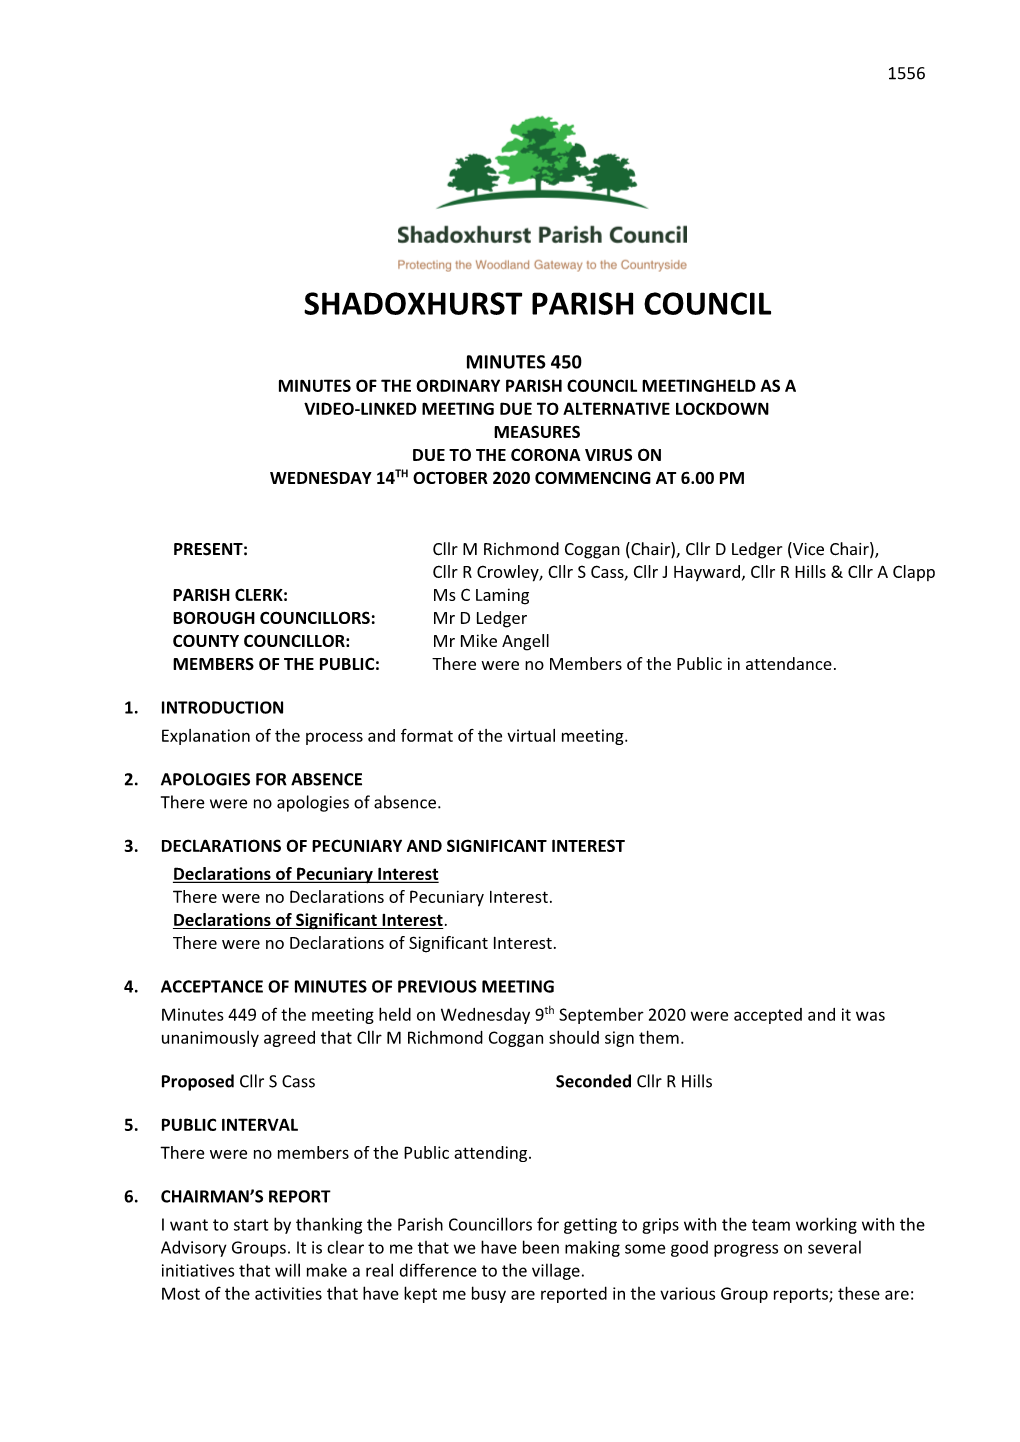 Shadoxhurst Parish Council